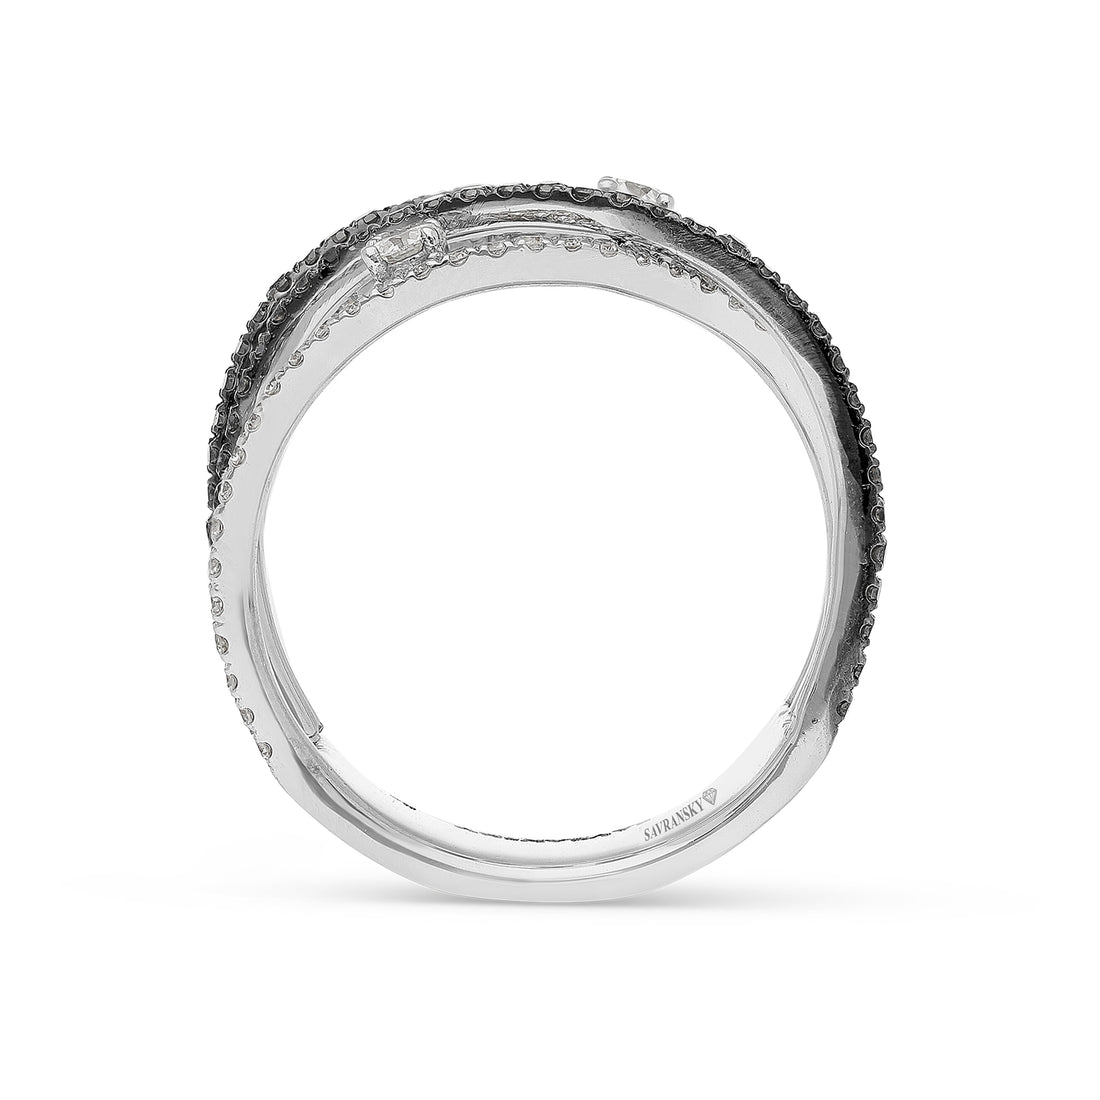 Multi Layer White and Black Diamond Ring